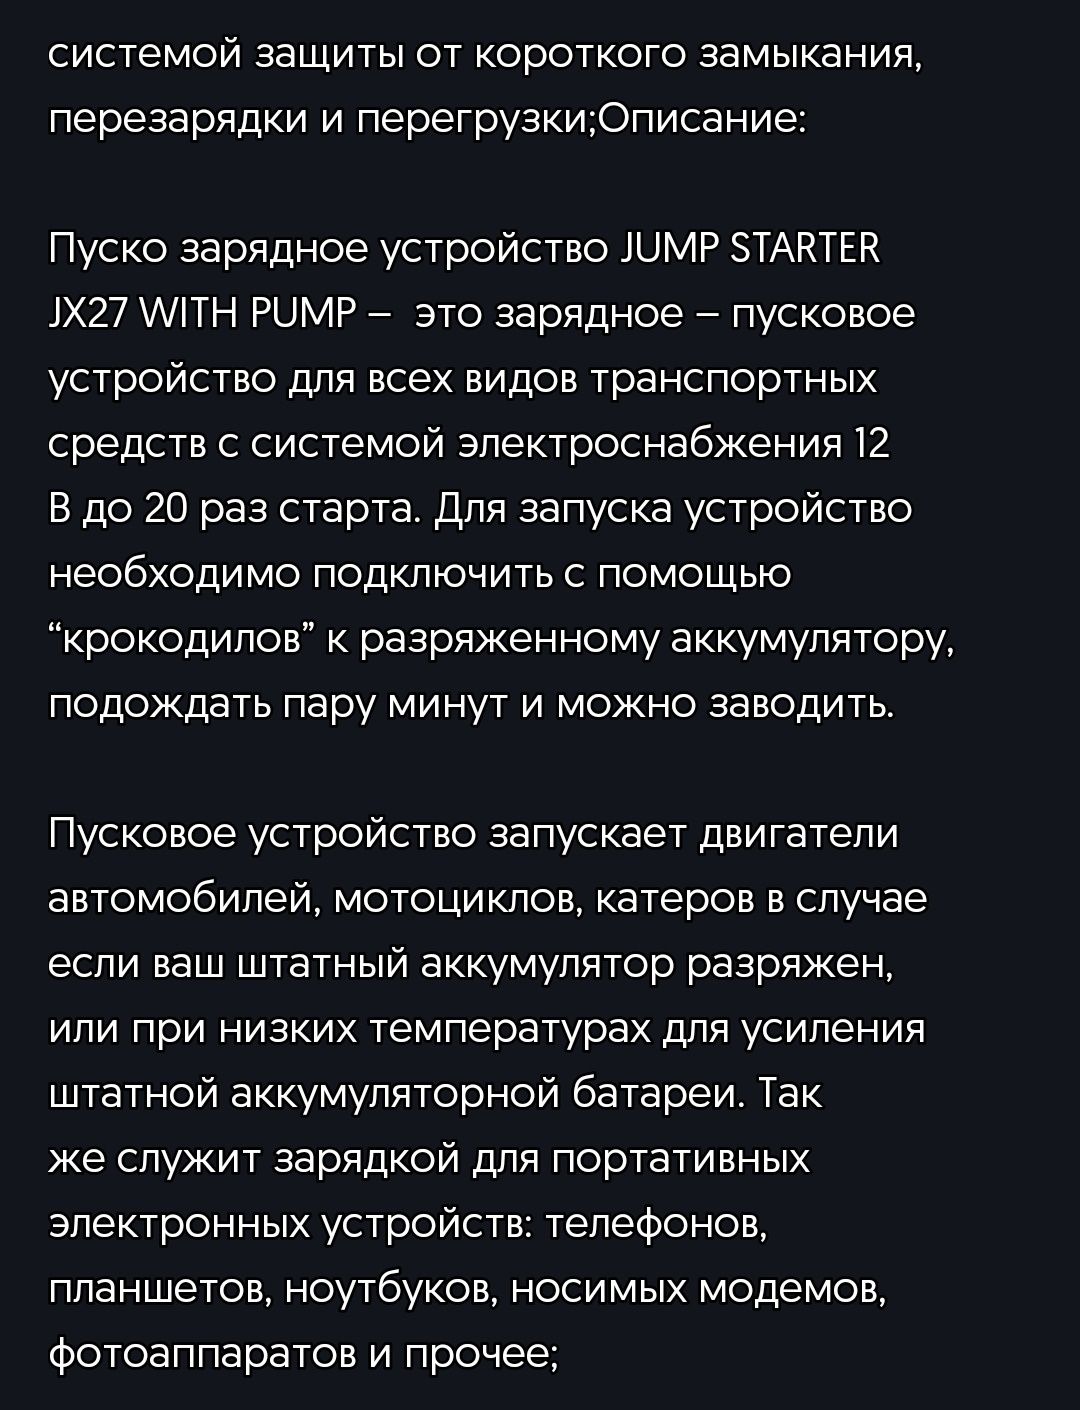 Пускозарядное устр JumpStarterJX 27 99800mAh с фонариком опис на фото